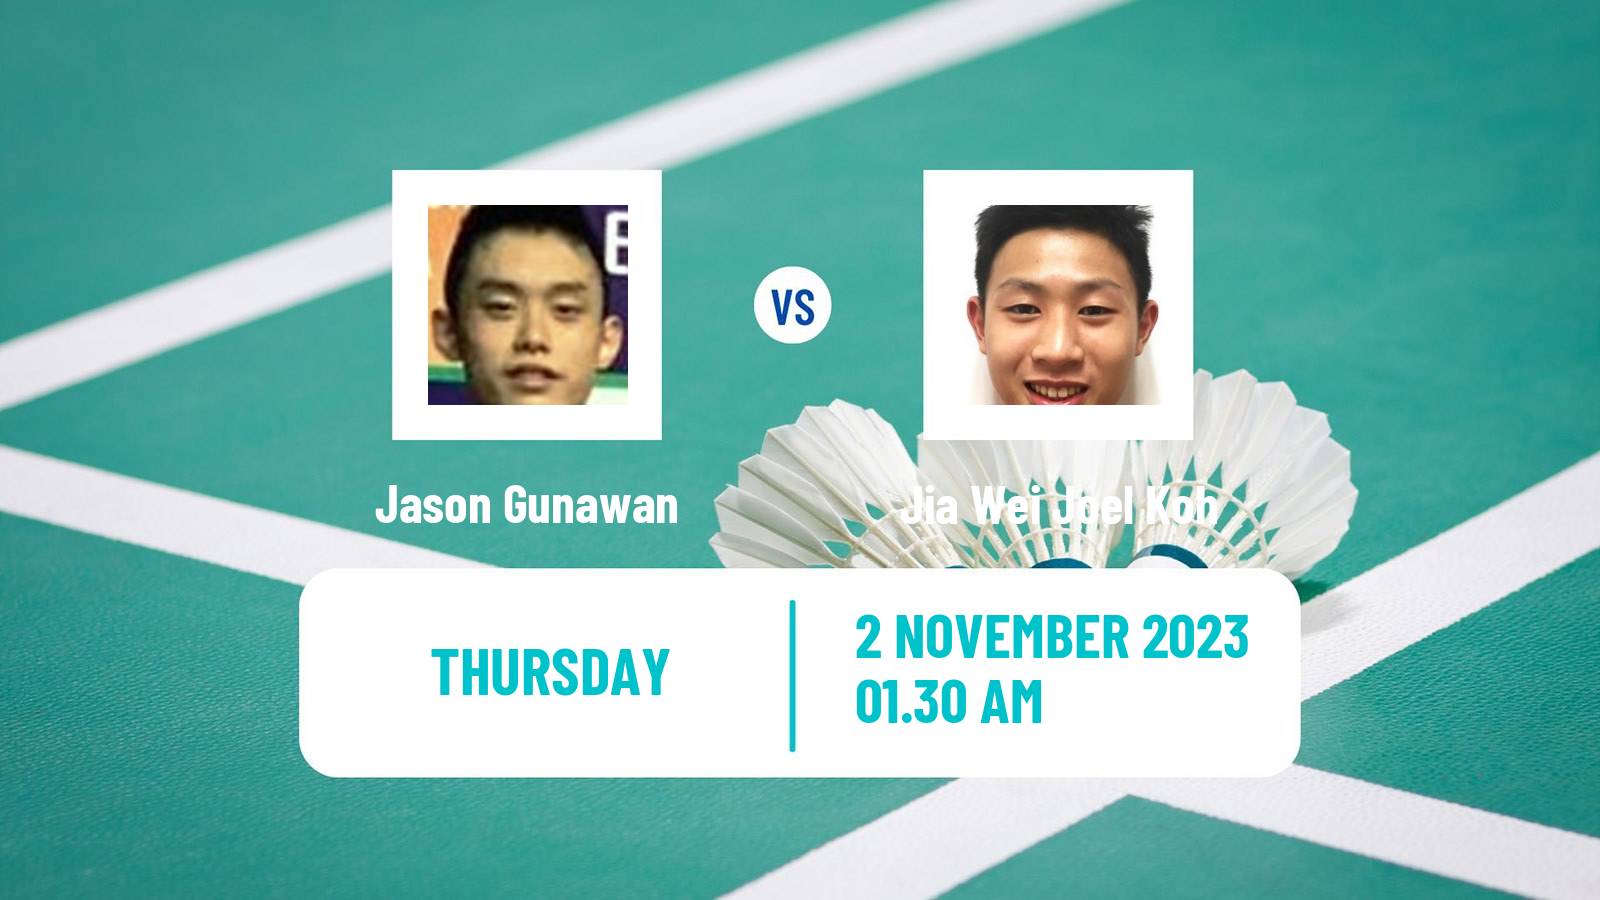 Badminton BWF World Tour Kl Masters Malaysia Super 100 Men Jason Gunawan - Jia Wei Joel Koh